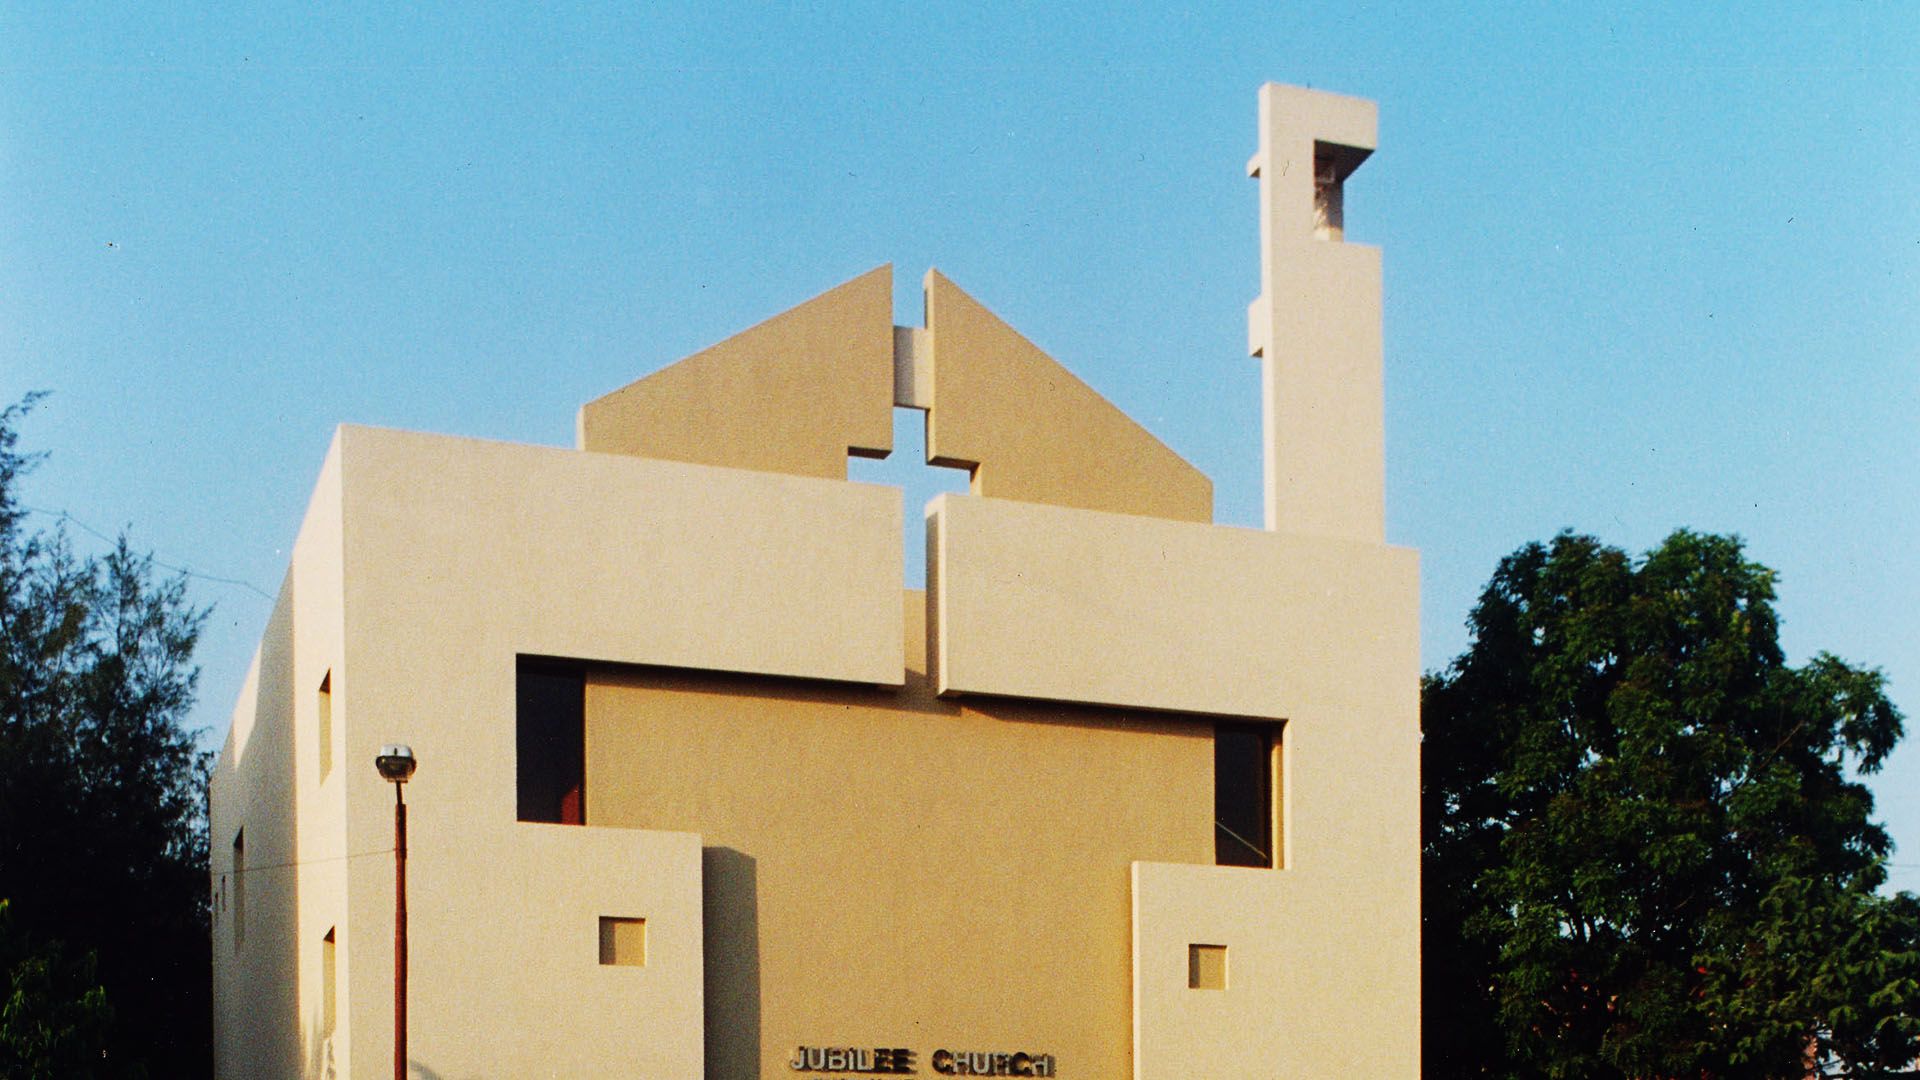 Jubilee Church Sanpada